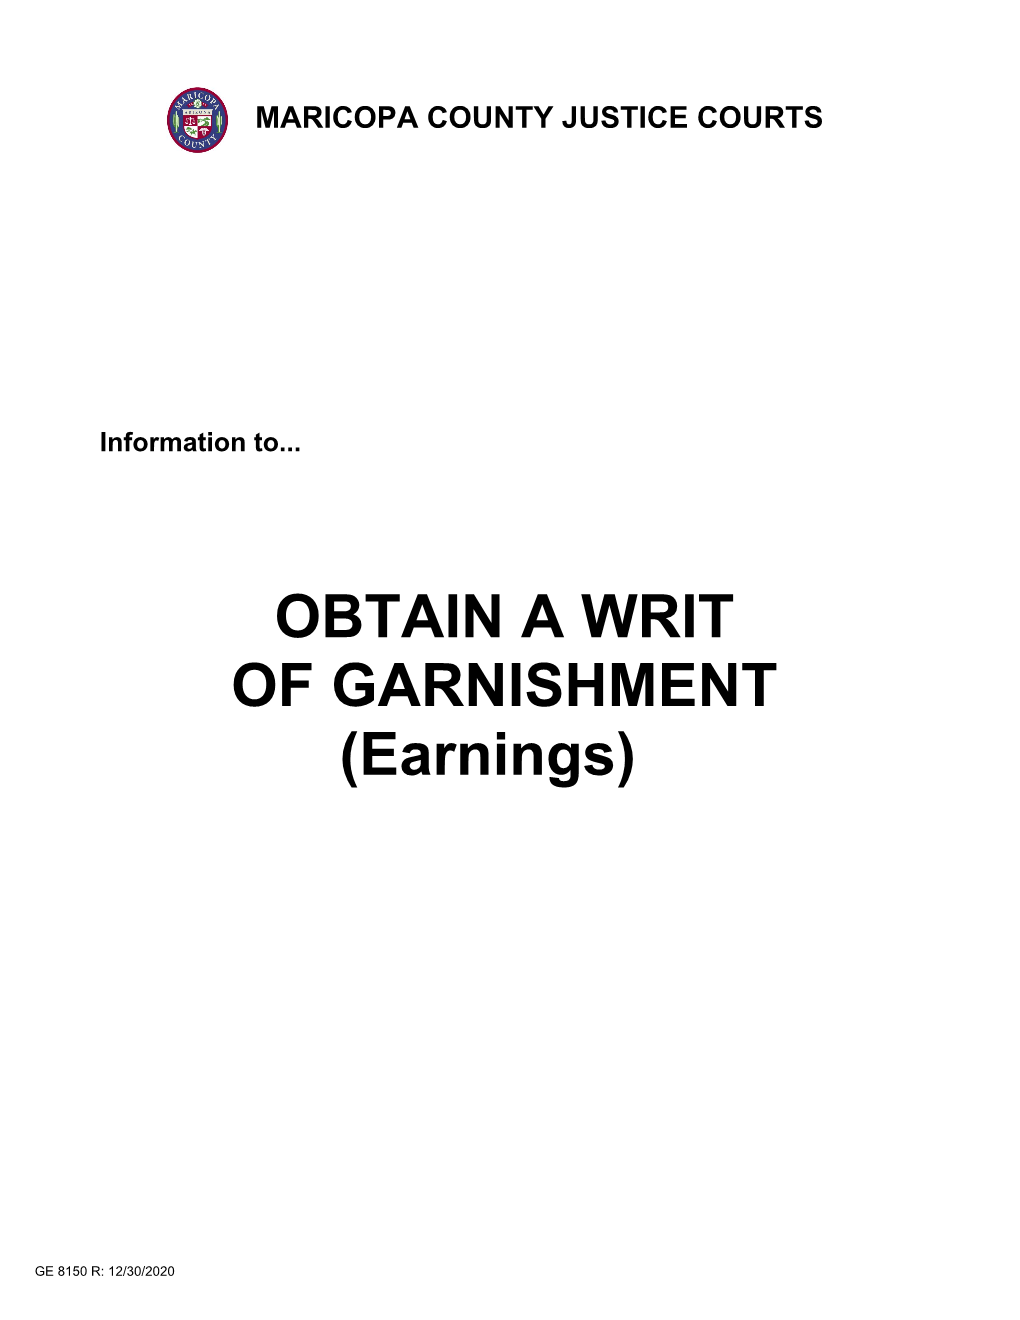 OBTAIN a WRIT of GARNISHMENT (Earnings)